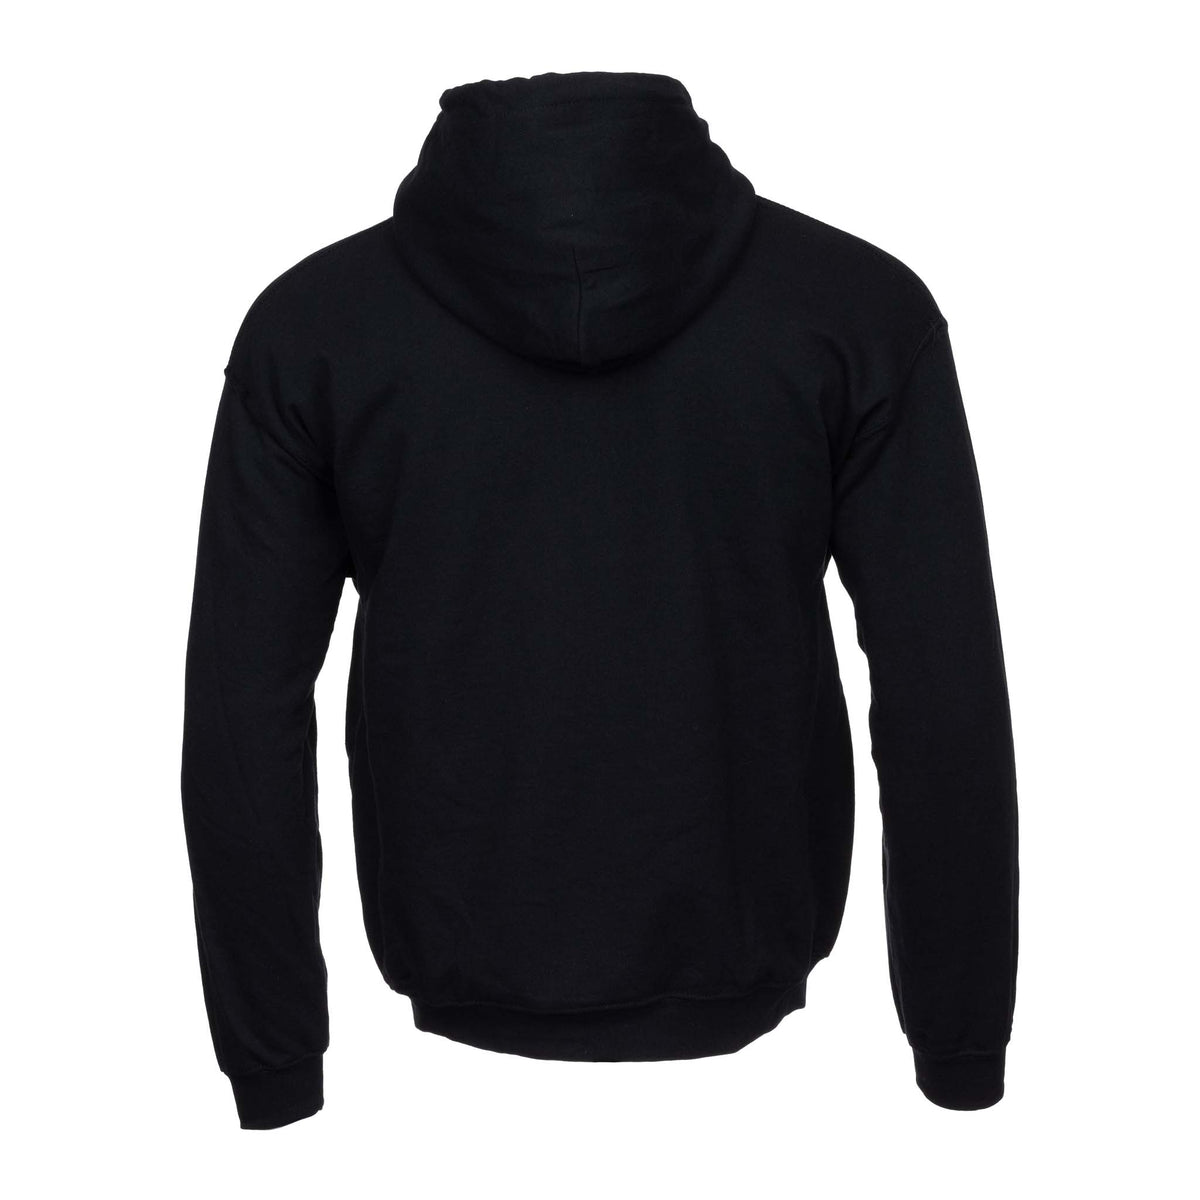 Sierra Nevada Pale-Porter-Stout Hooded Sweatshirt Black - Image of back